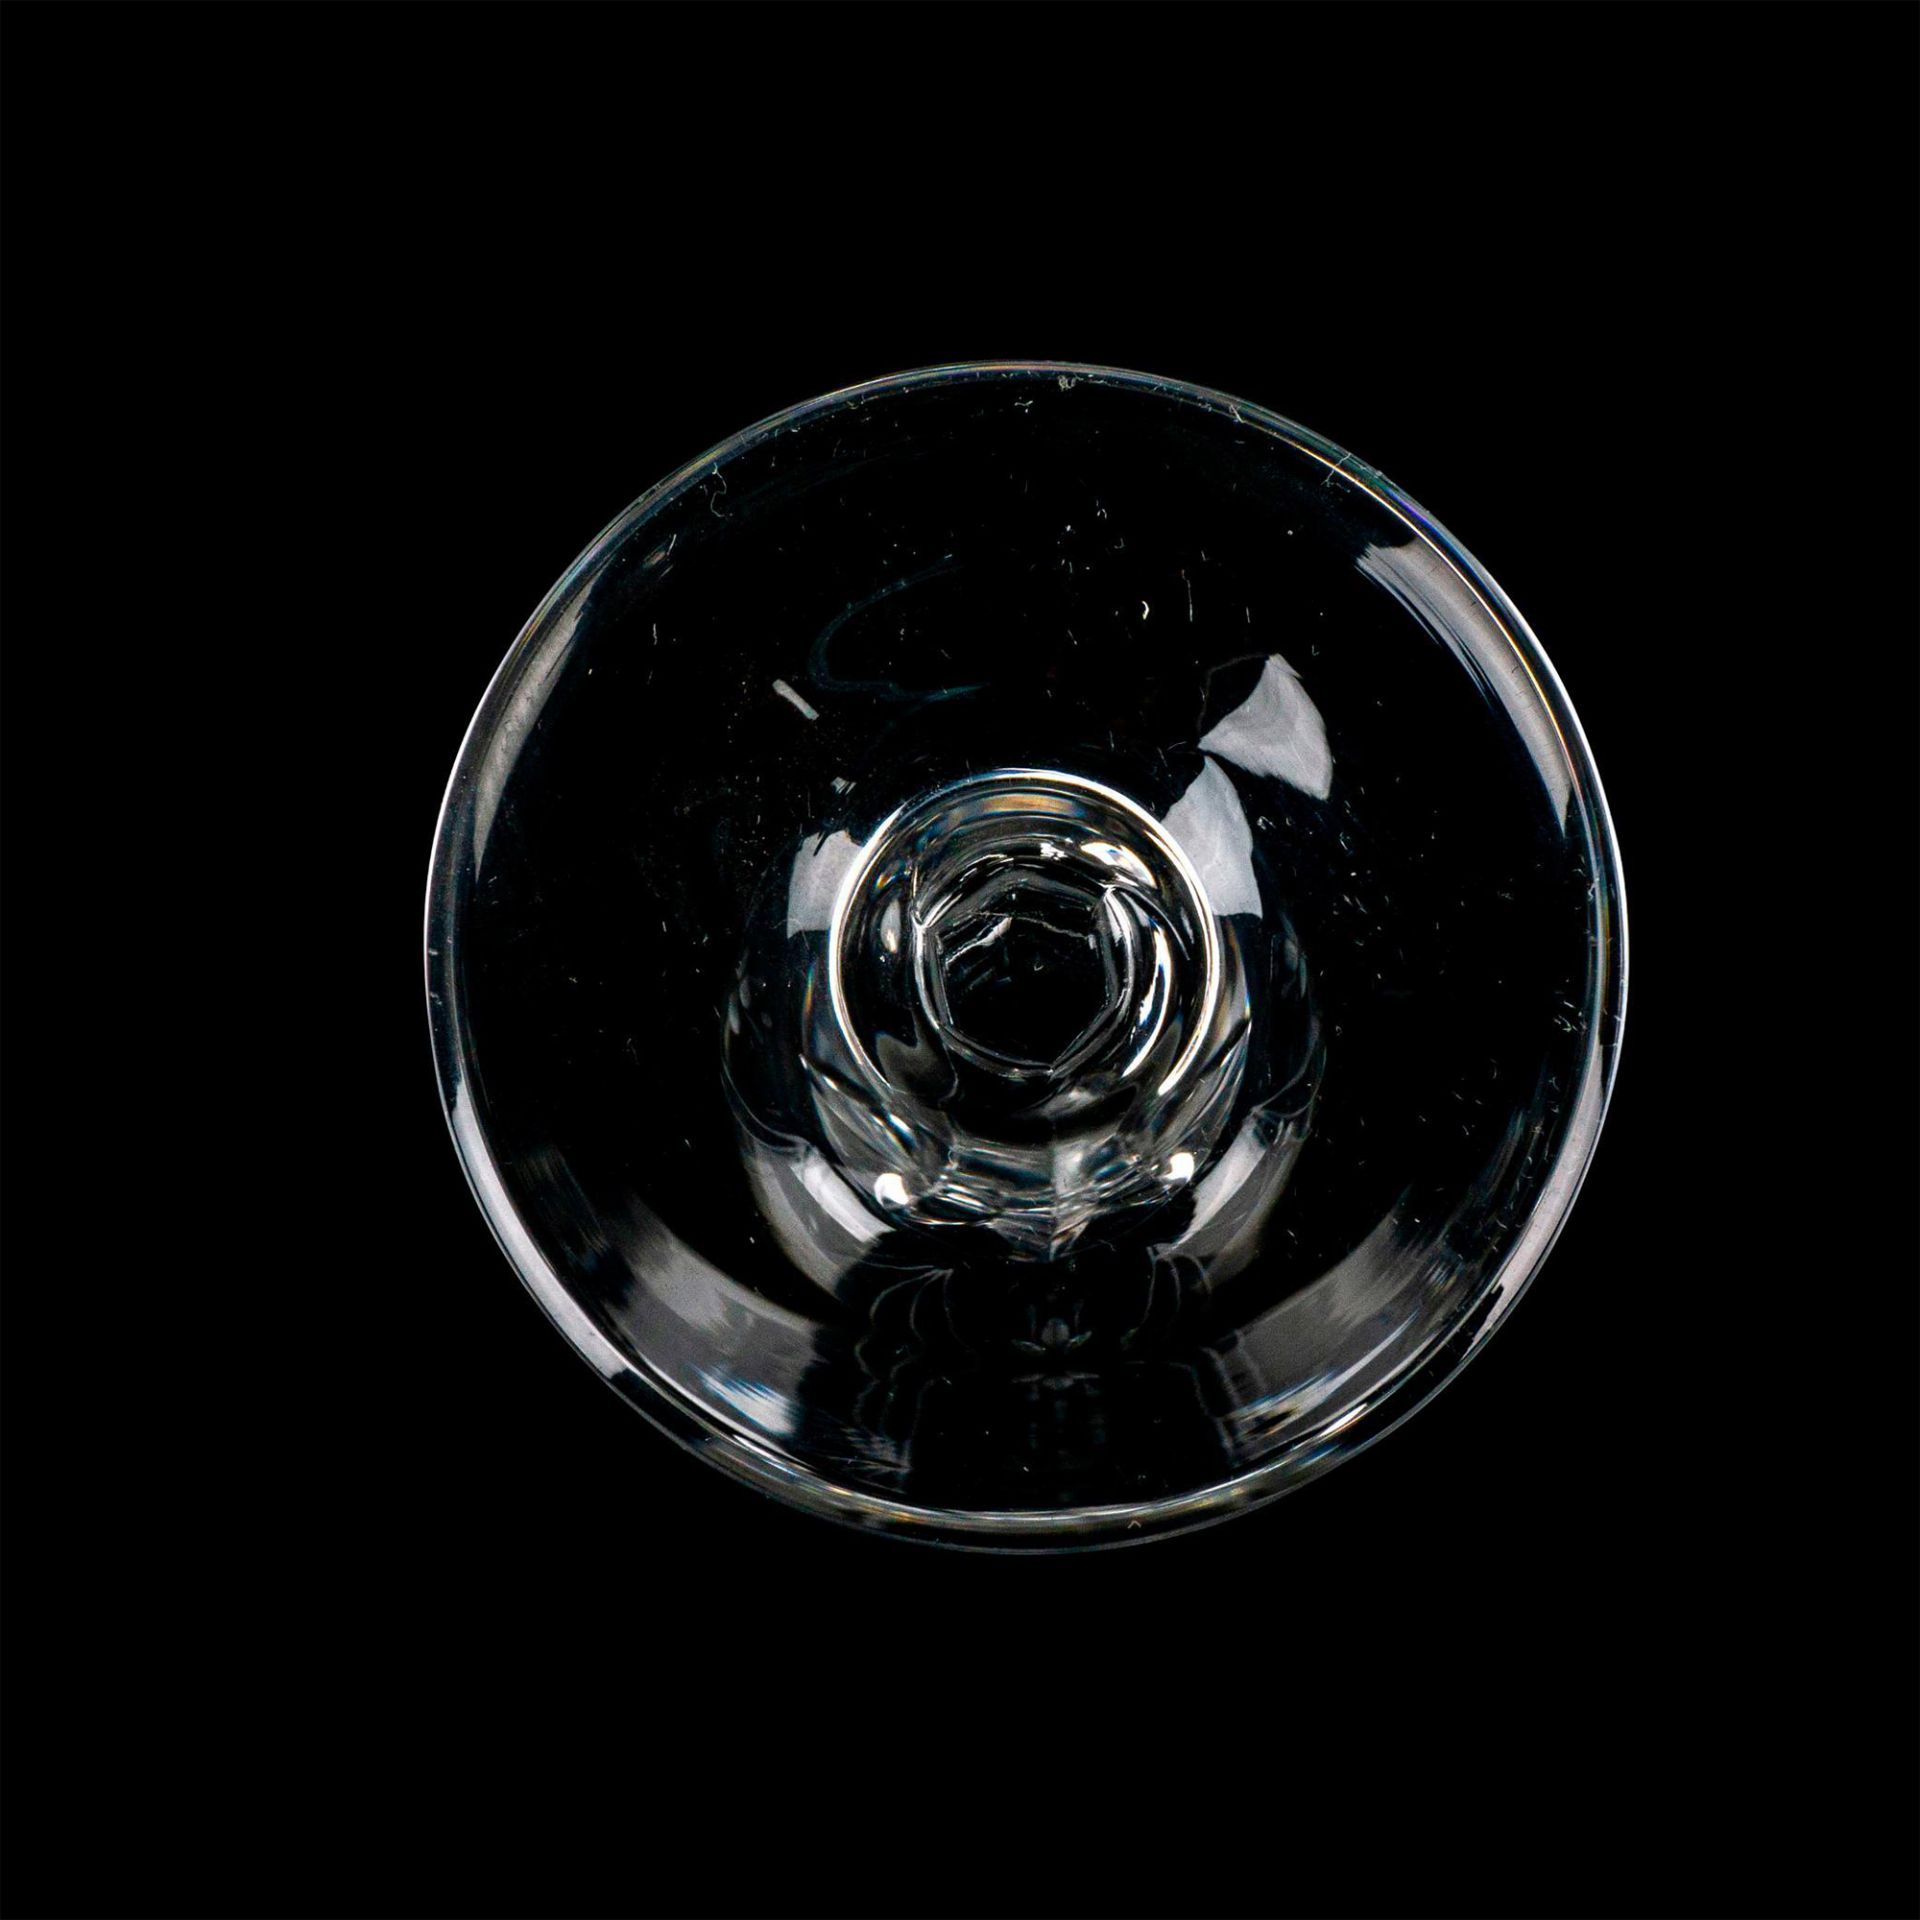 4pc Gorham Crystal Sherry/Dessert Wine Glasses, Jolie - Image 3 of 3